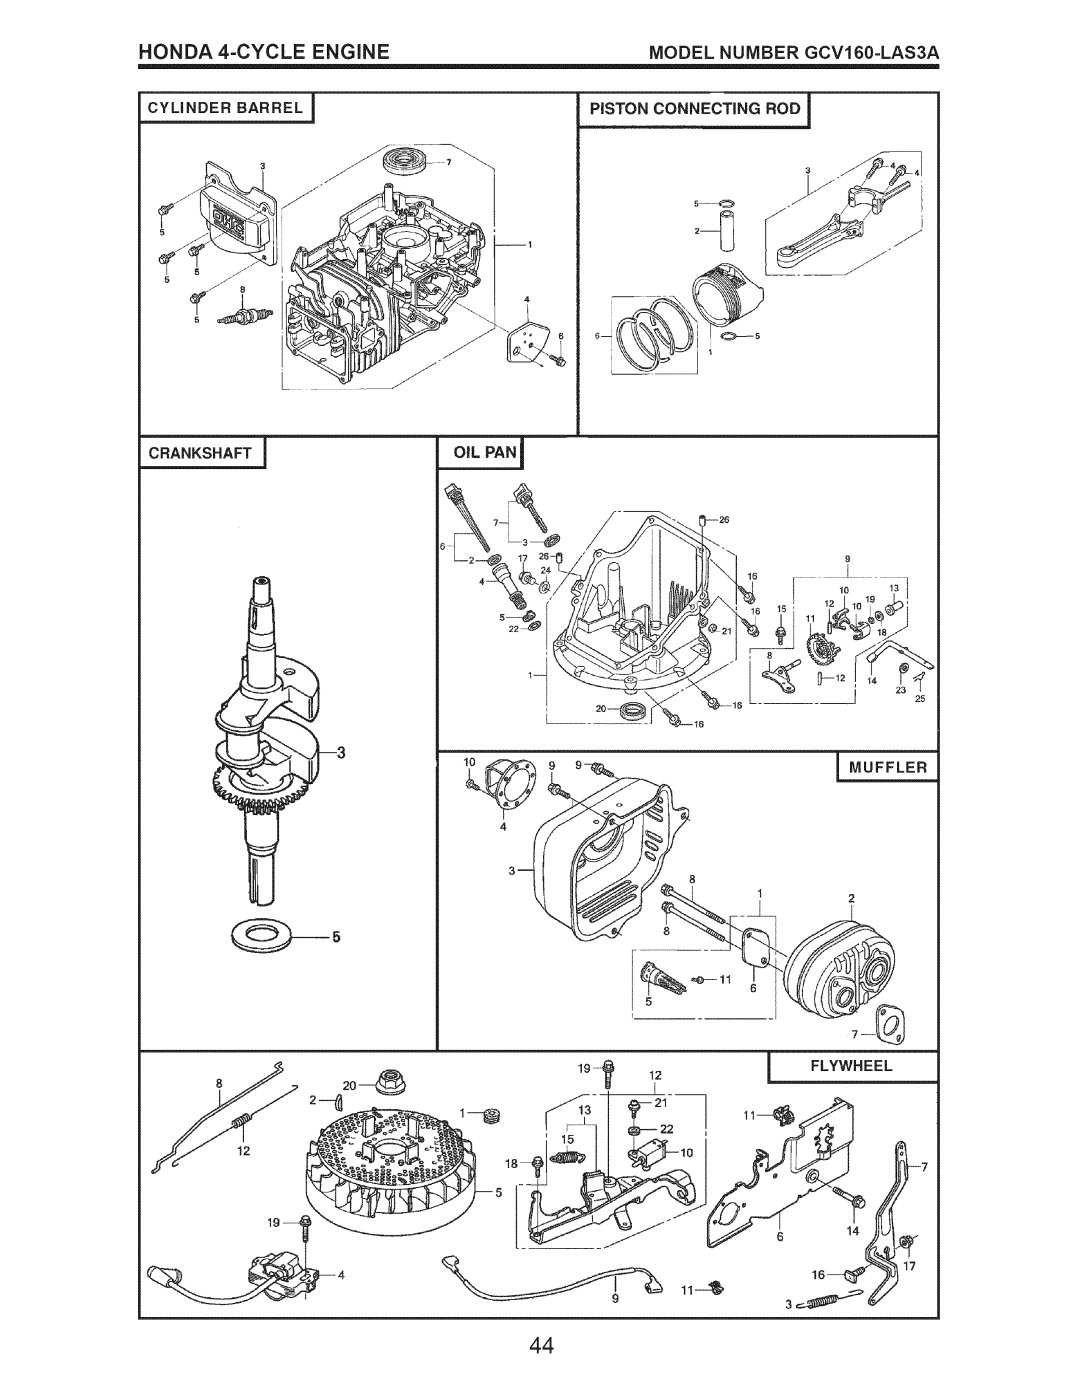 Craftsman 917.376543 manual HONDA 4-CYCLE, Engine, i MUFFLER 